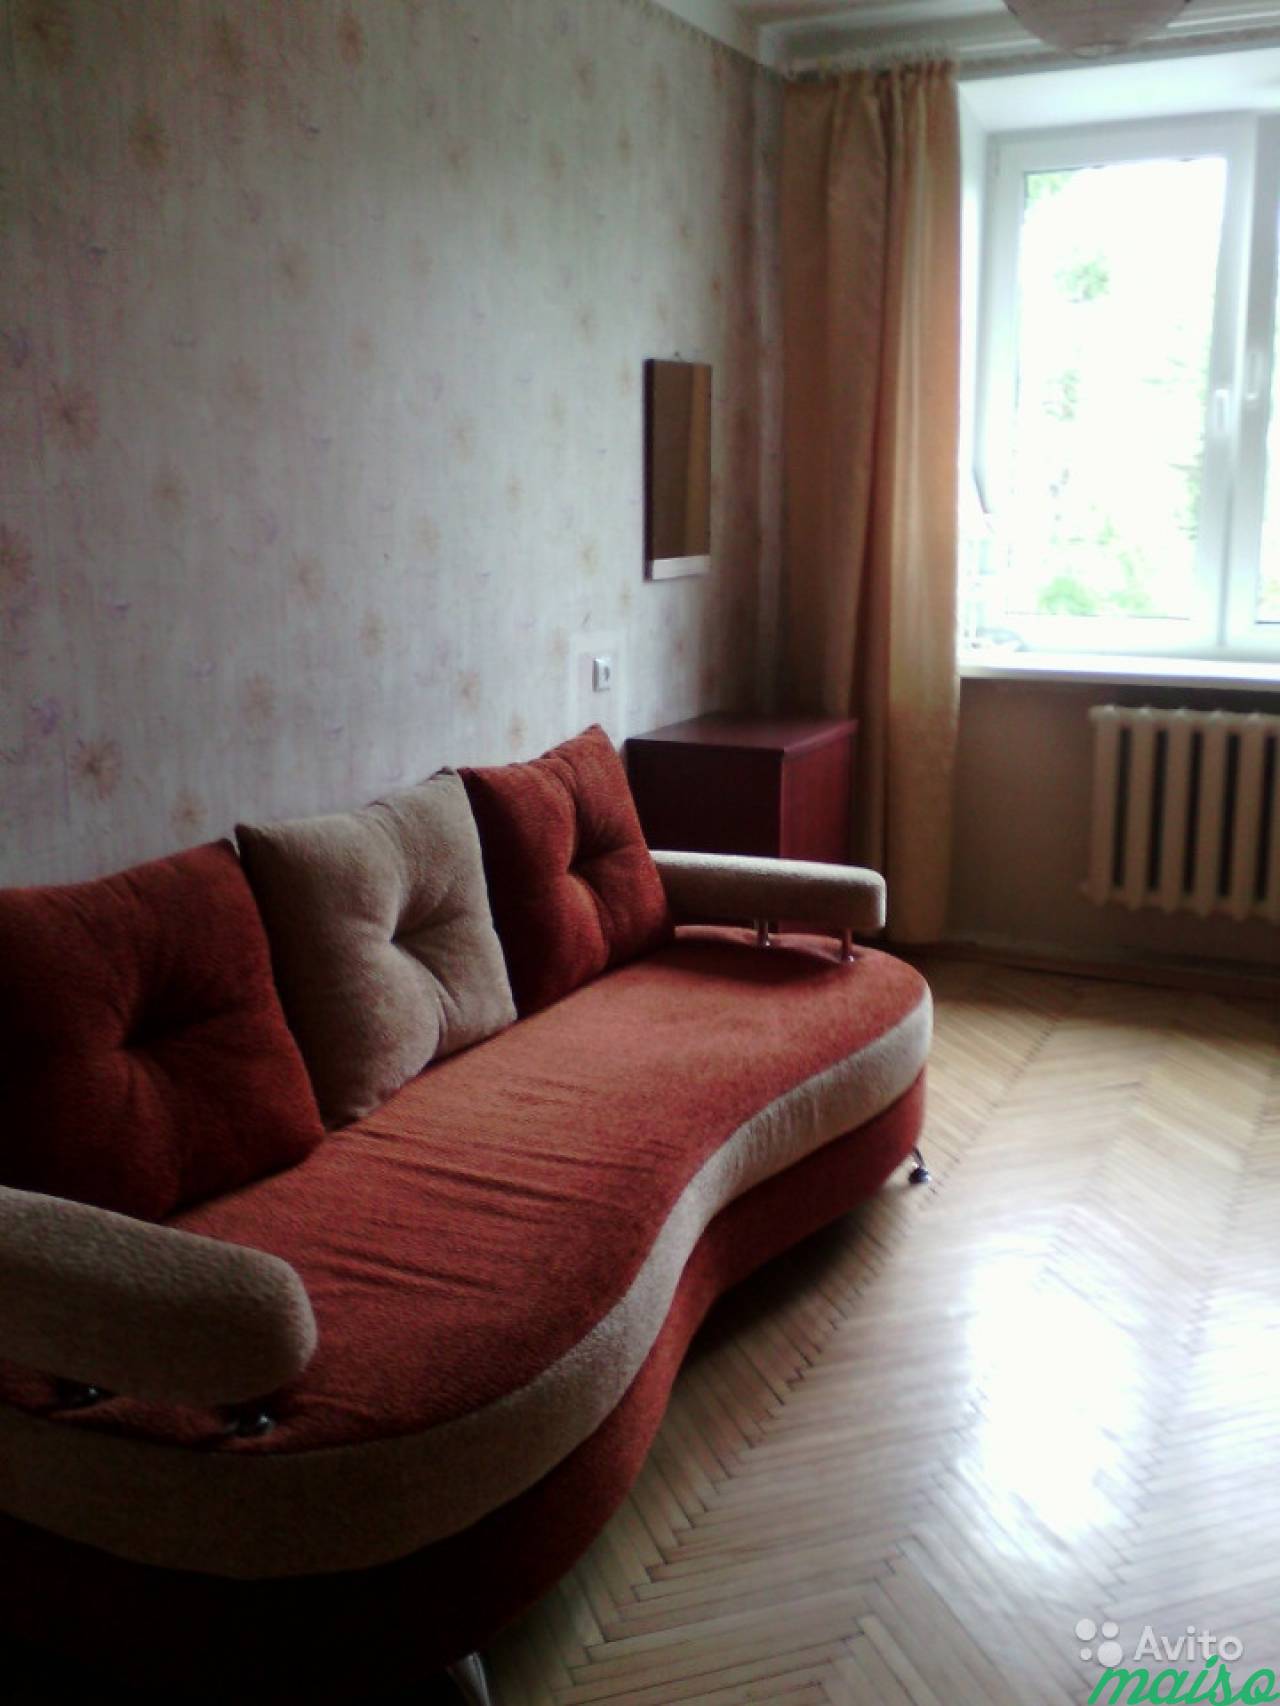 Комната 14 м² в 3-к, 4/5 эт. в Санкт-Петербурге. Фото 1